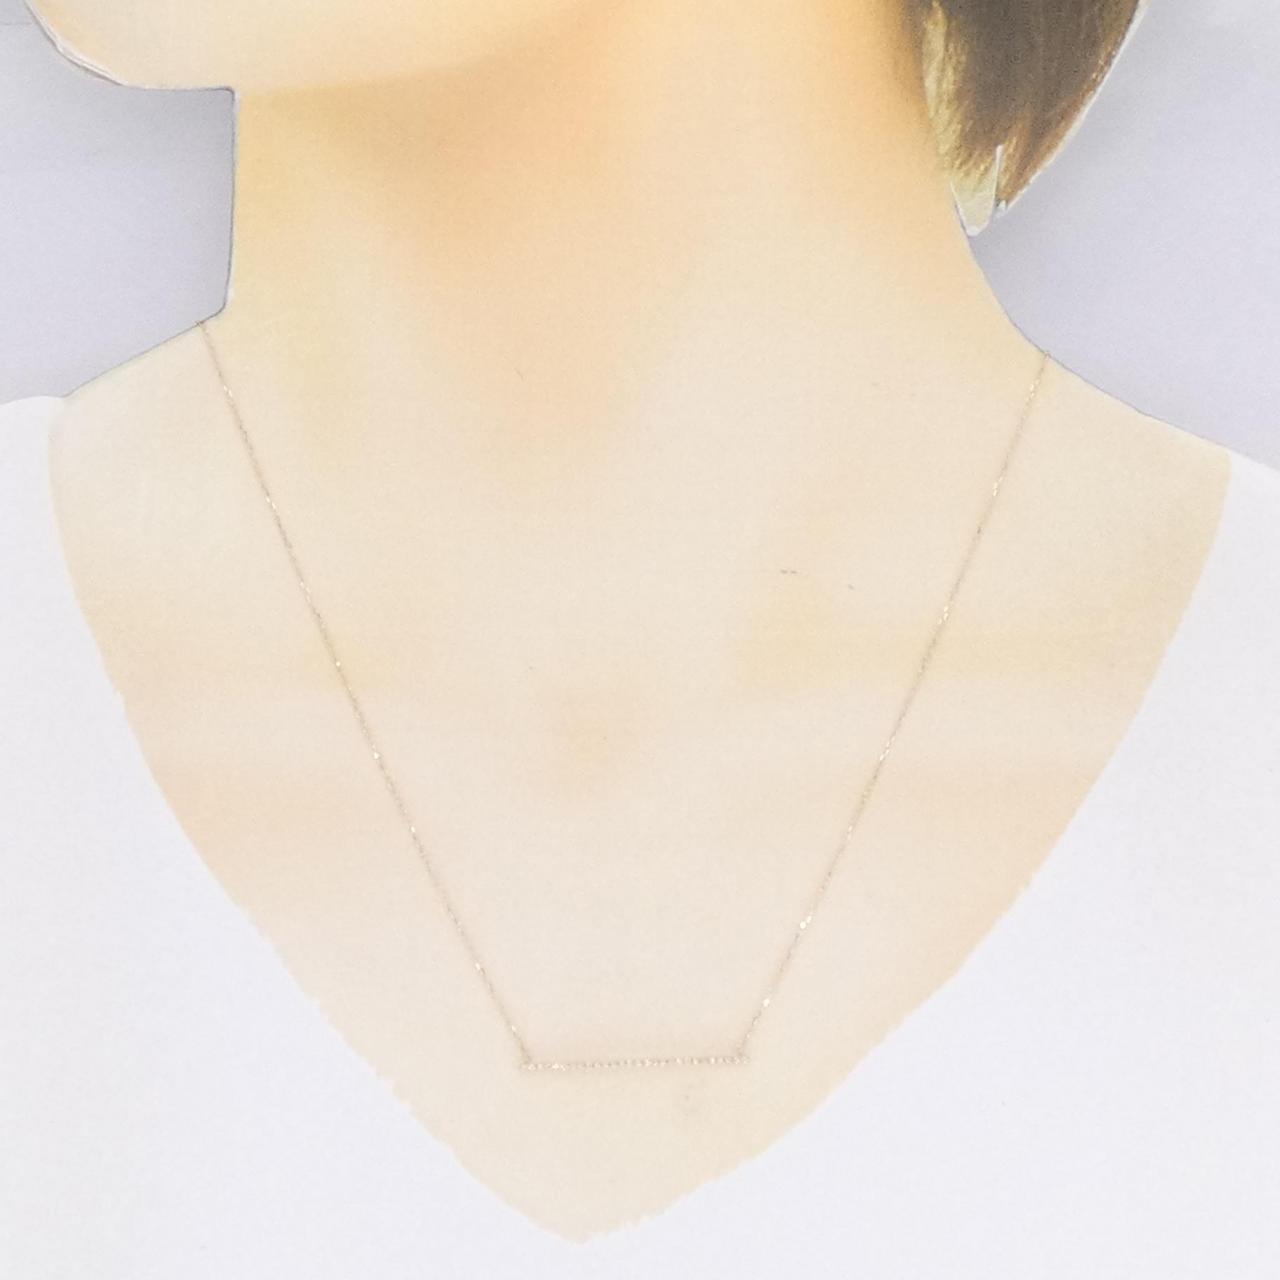 [BRAND NEW] K18YG Diamond necklace 0.07CT